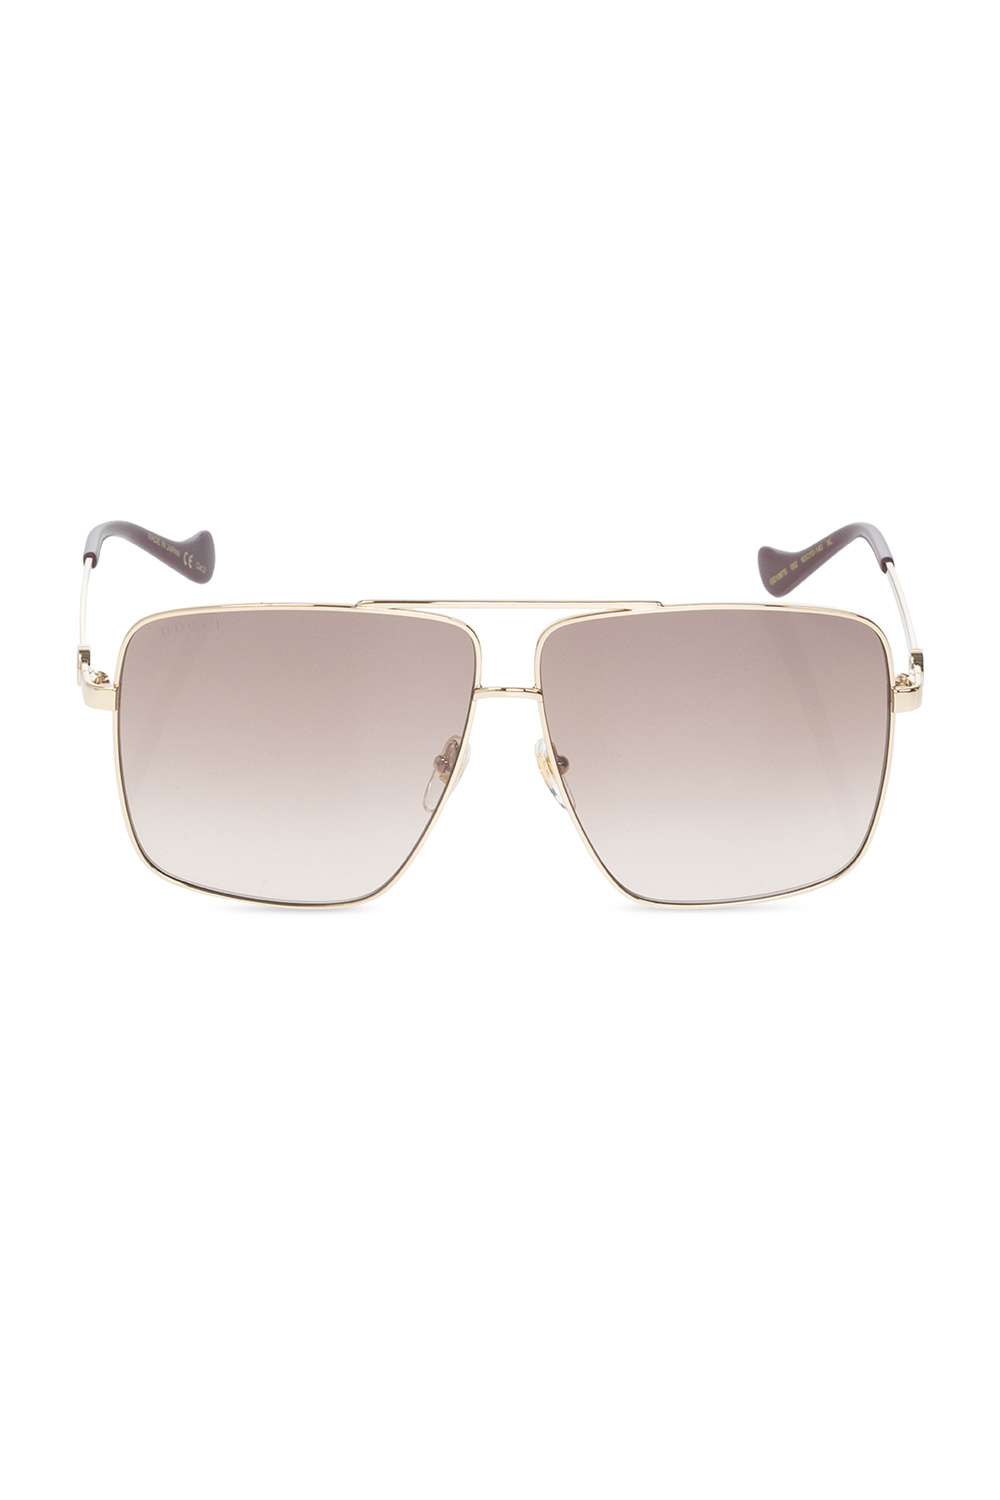 Gucci celine eyewear oversized sunglasses